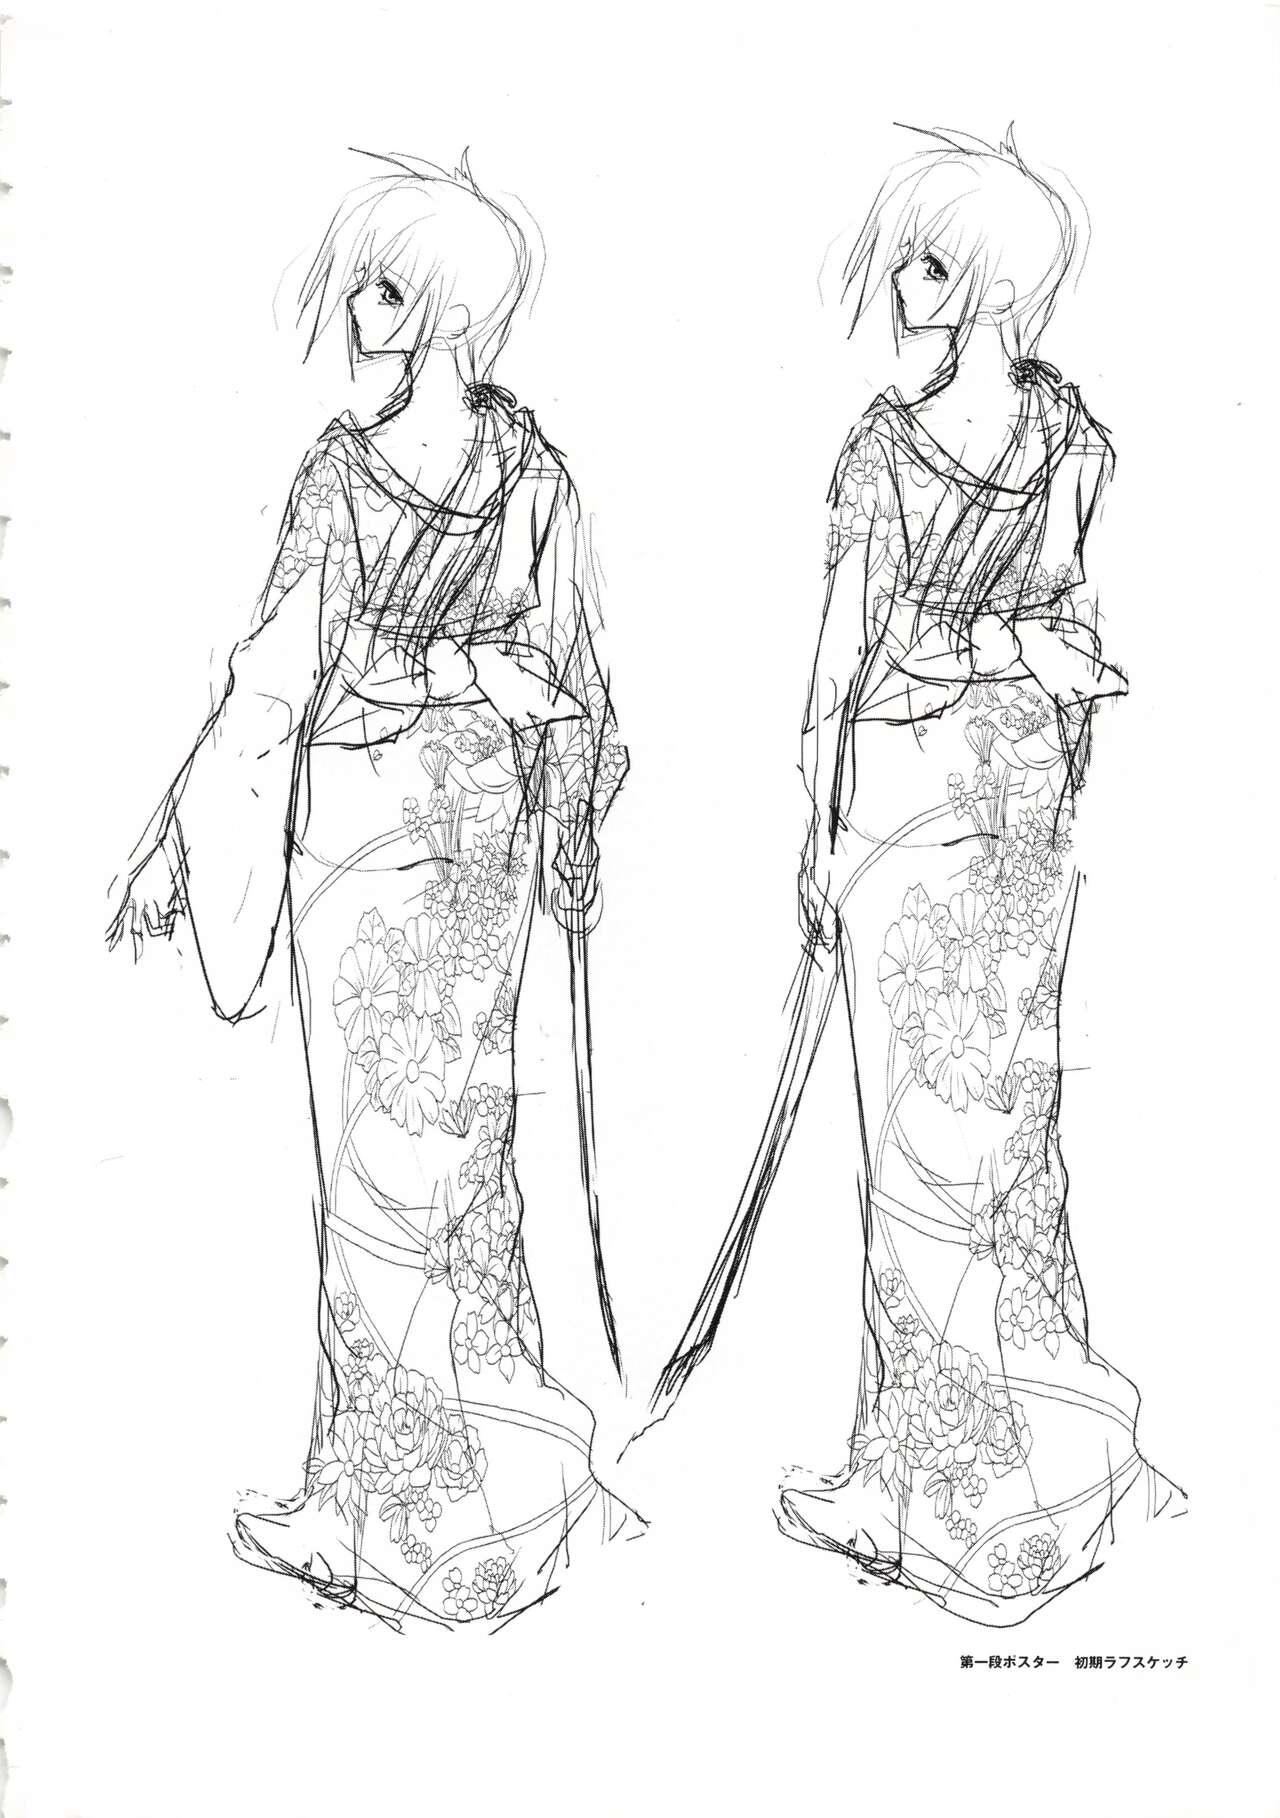 Hanachirasu - Initial Sketches and Unprocessed Illustrations - Selection 4